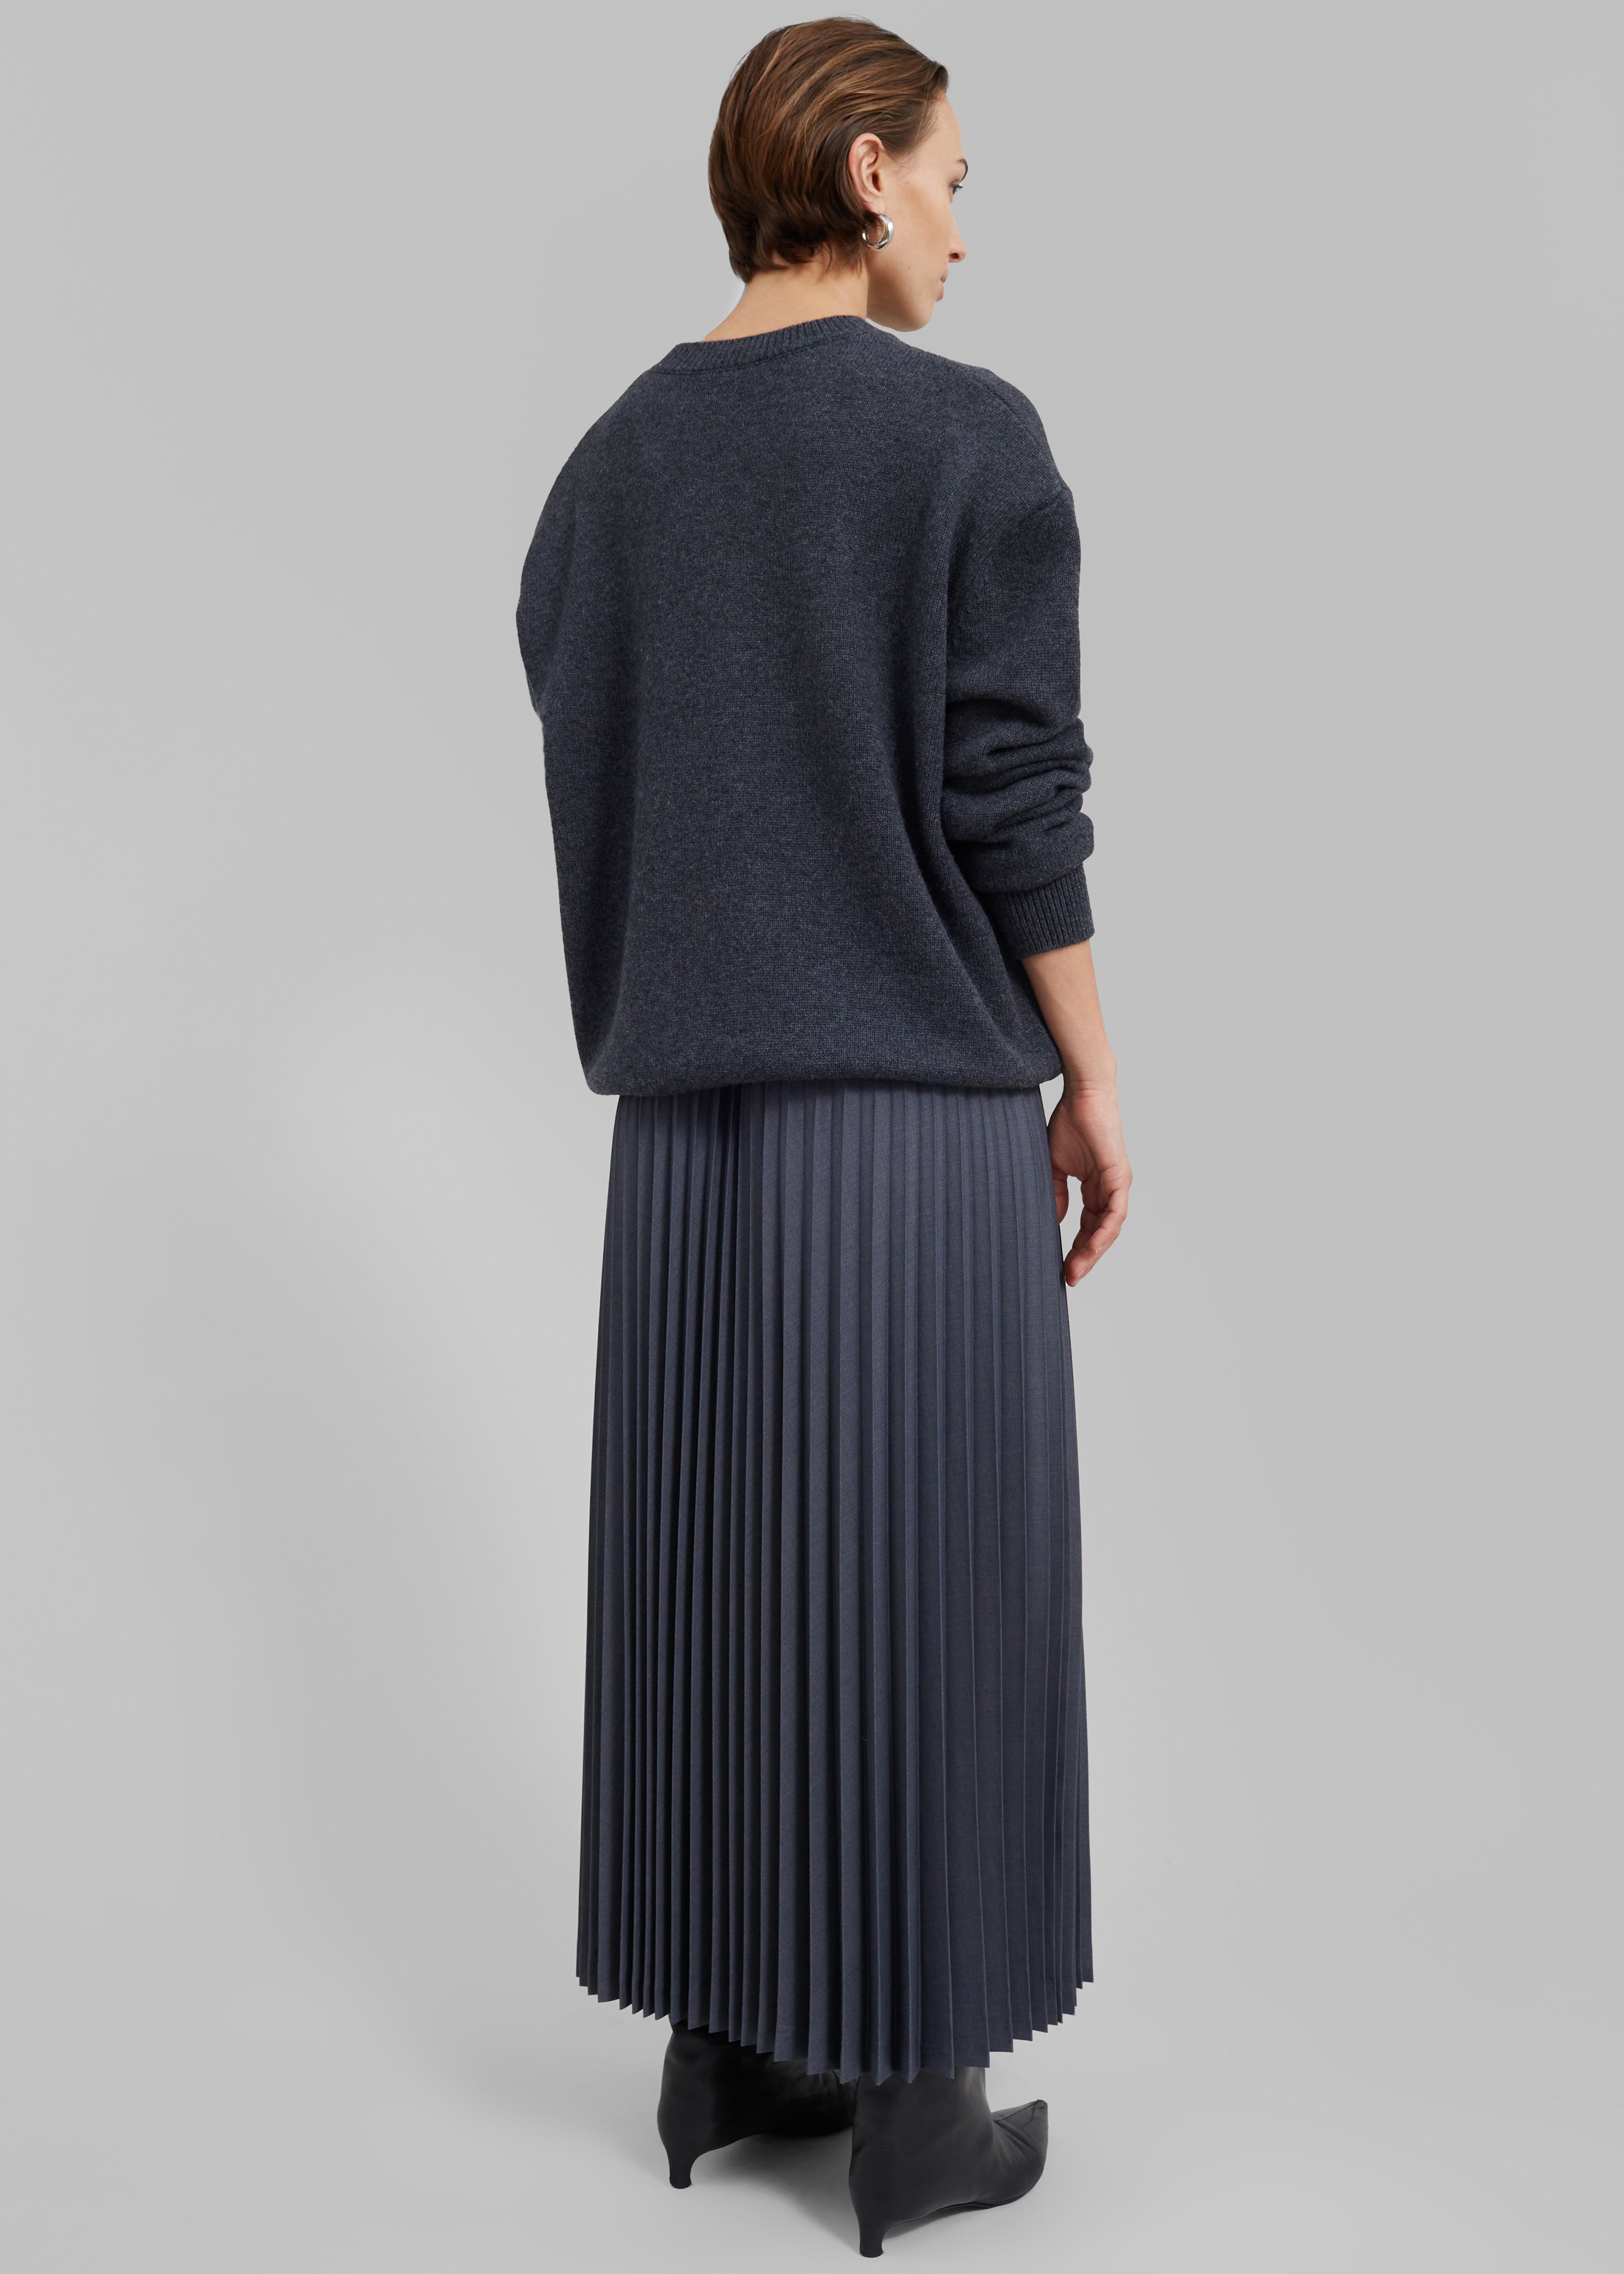 Orem Pleated Skirt - Charcoal - 6